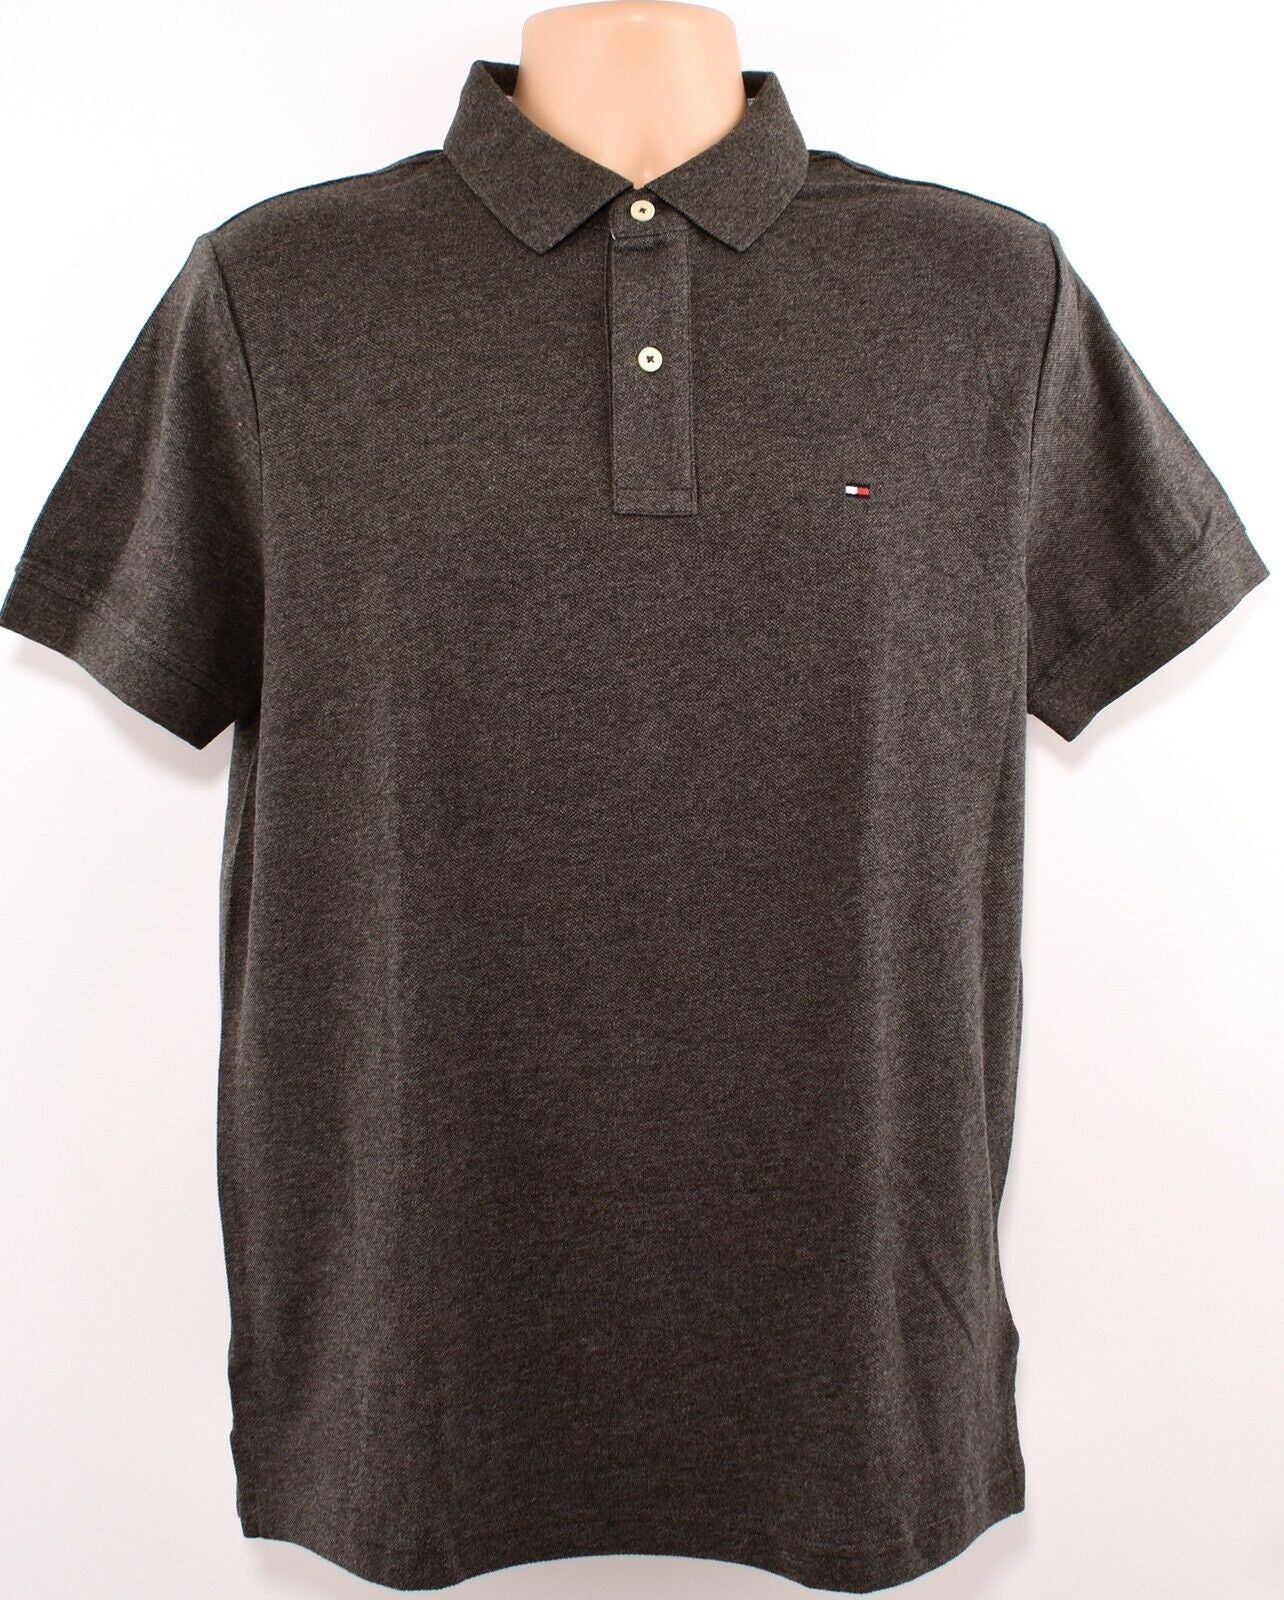 TOMMY HILFIGER Men's Classic Polo Shirt, Dark Grey, size M /size L